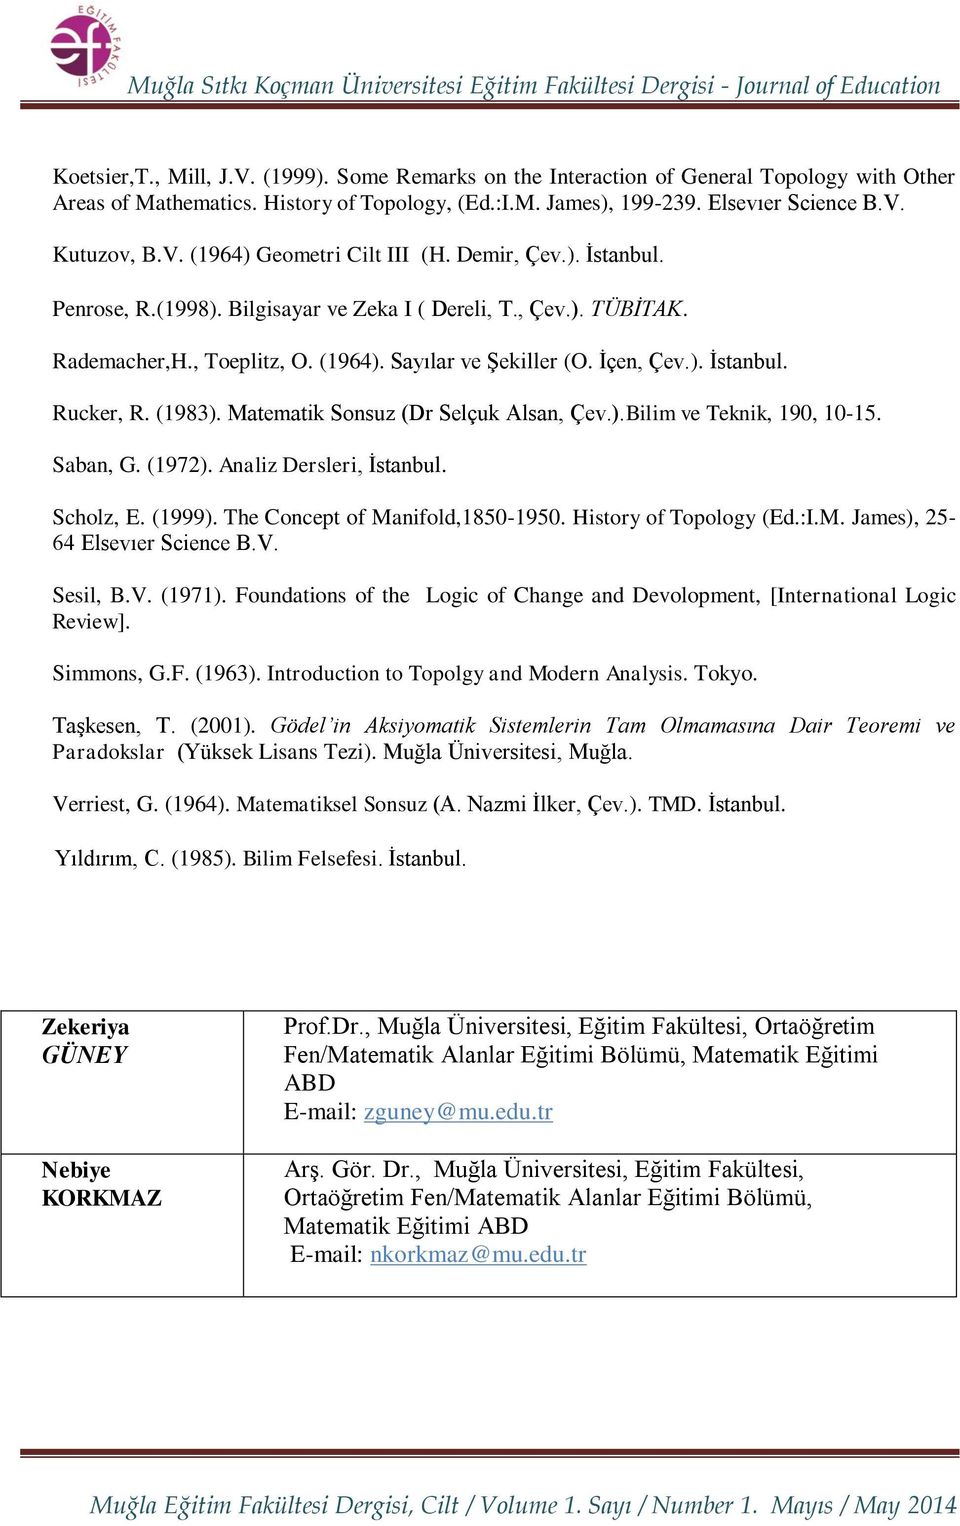 Matematik Sonsuz (Dr Selçuk Alsan, Çev.).Bilim ve Teknik, 190, 10-15. Saban, G. (1972). Analiz Dersleri, İstanbul. Scholz, E. (1999). The Concept of Manifold,1850-1950. History of Topology (Ed.:I.M. James), 25-64 Elsevıer Science B.